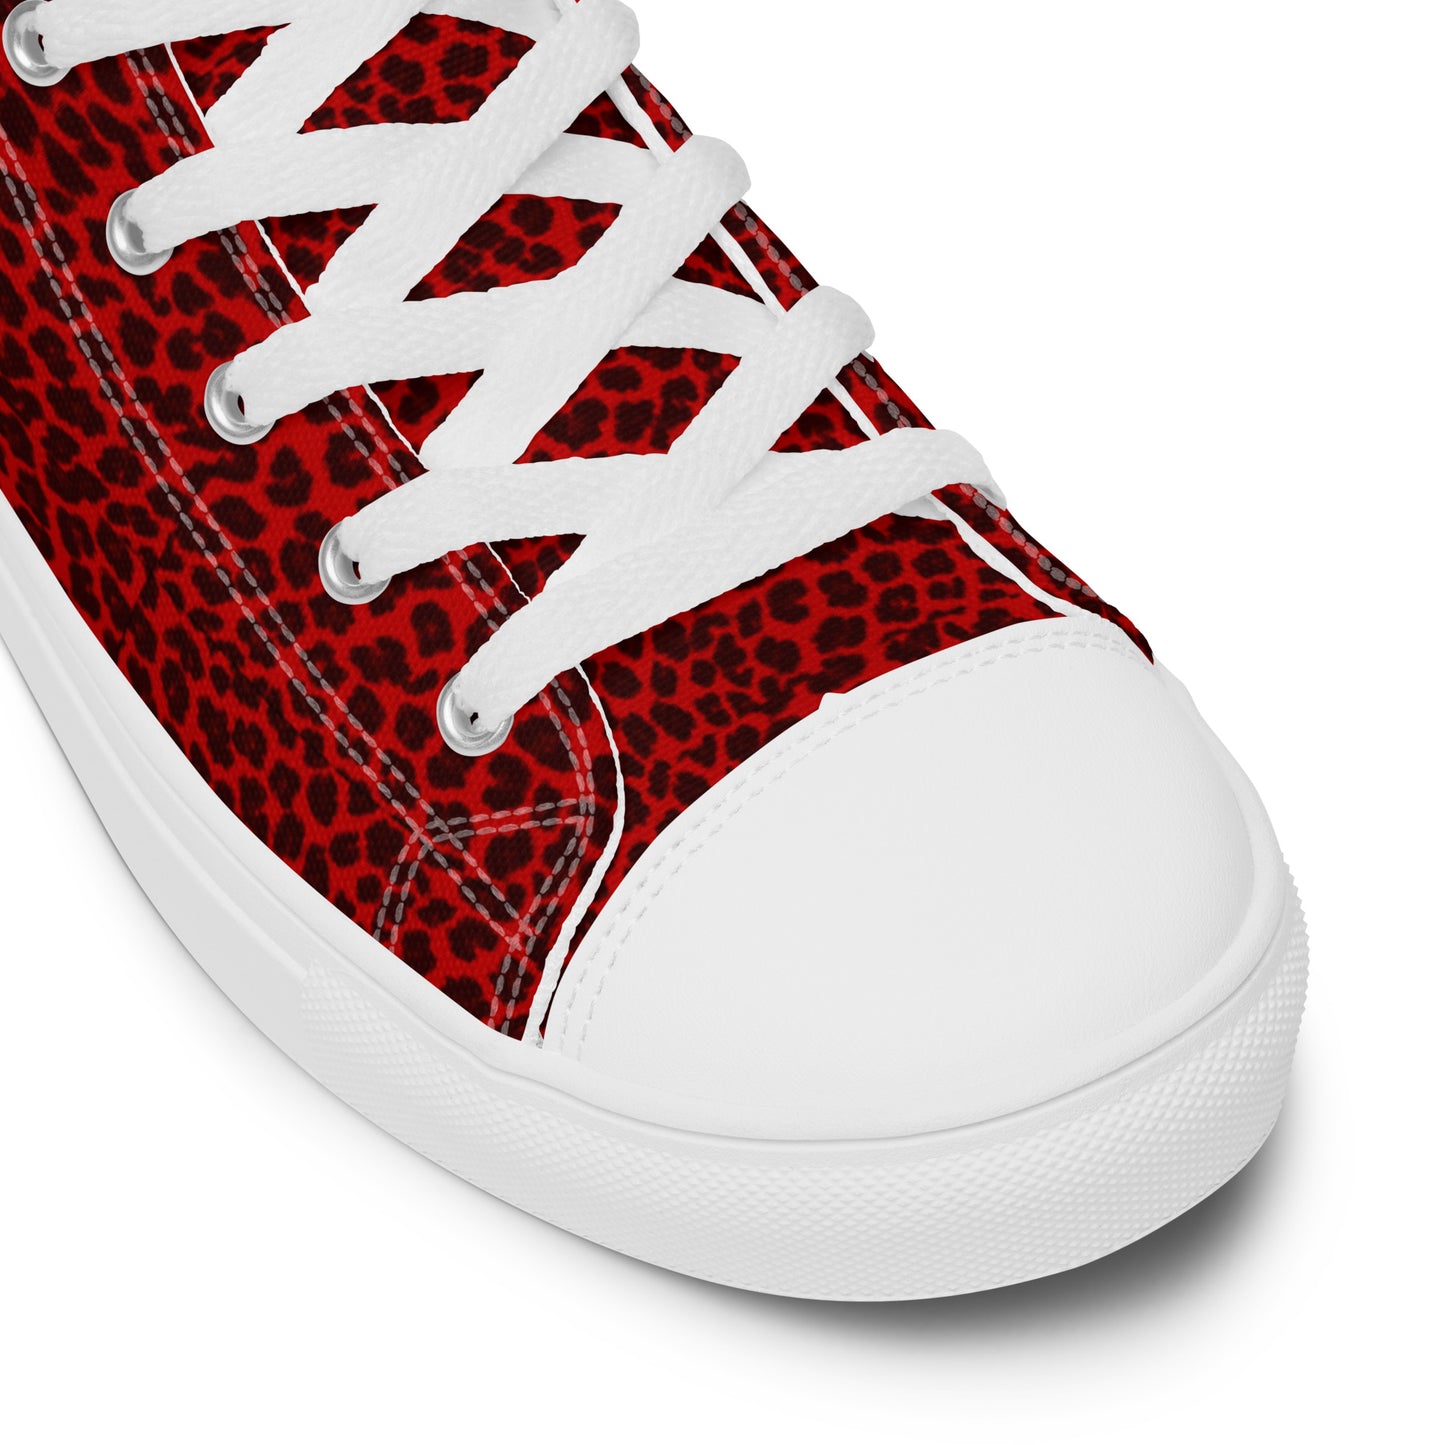 Sixty Eight 93 Logo White Cheetah Red Women’s High Top Shoes